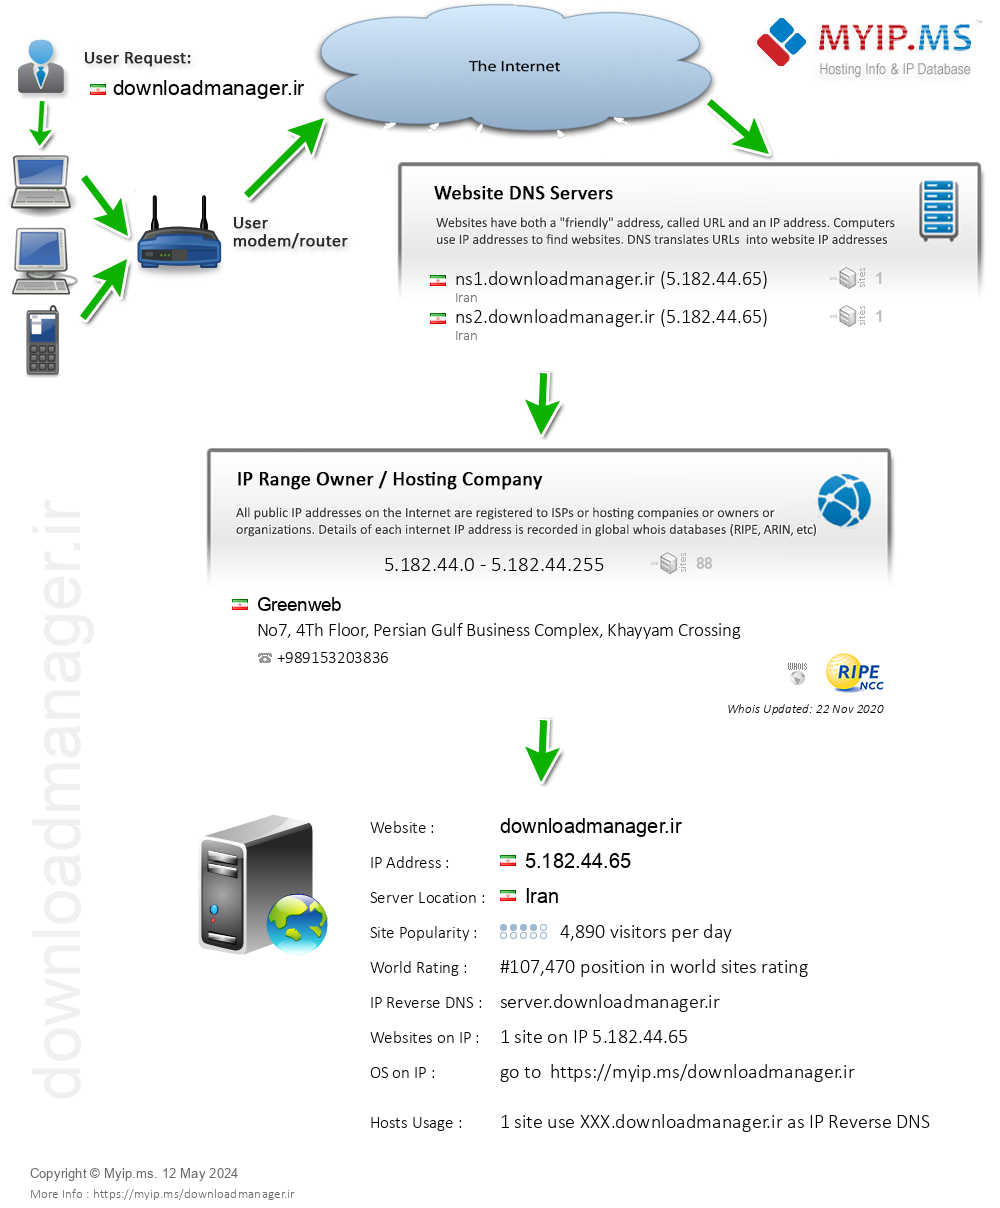 Downloadmanager.ir - Website Hosting Visual IP Diagram